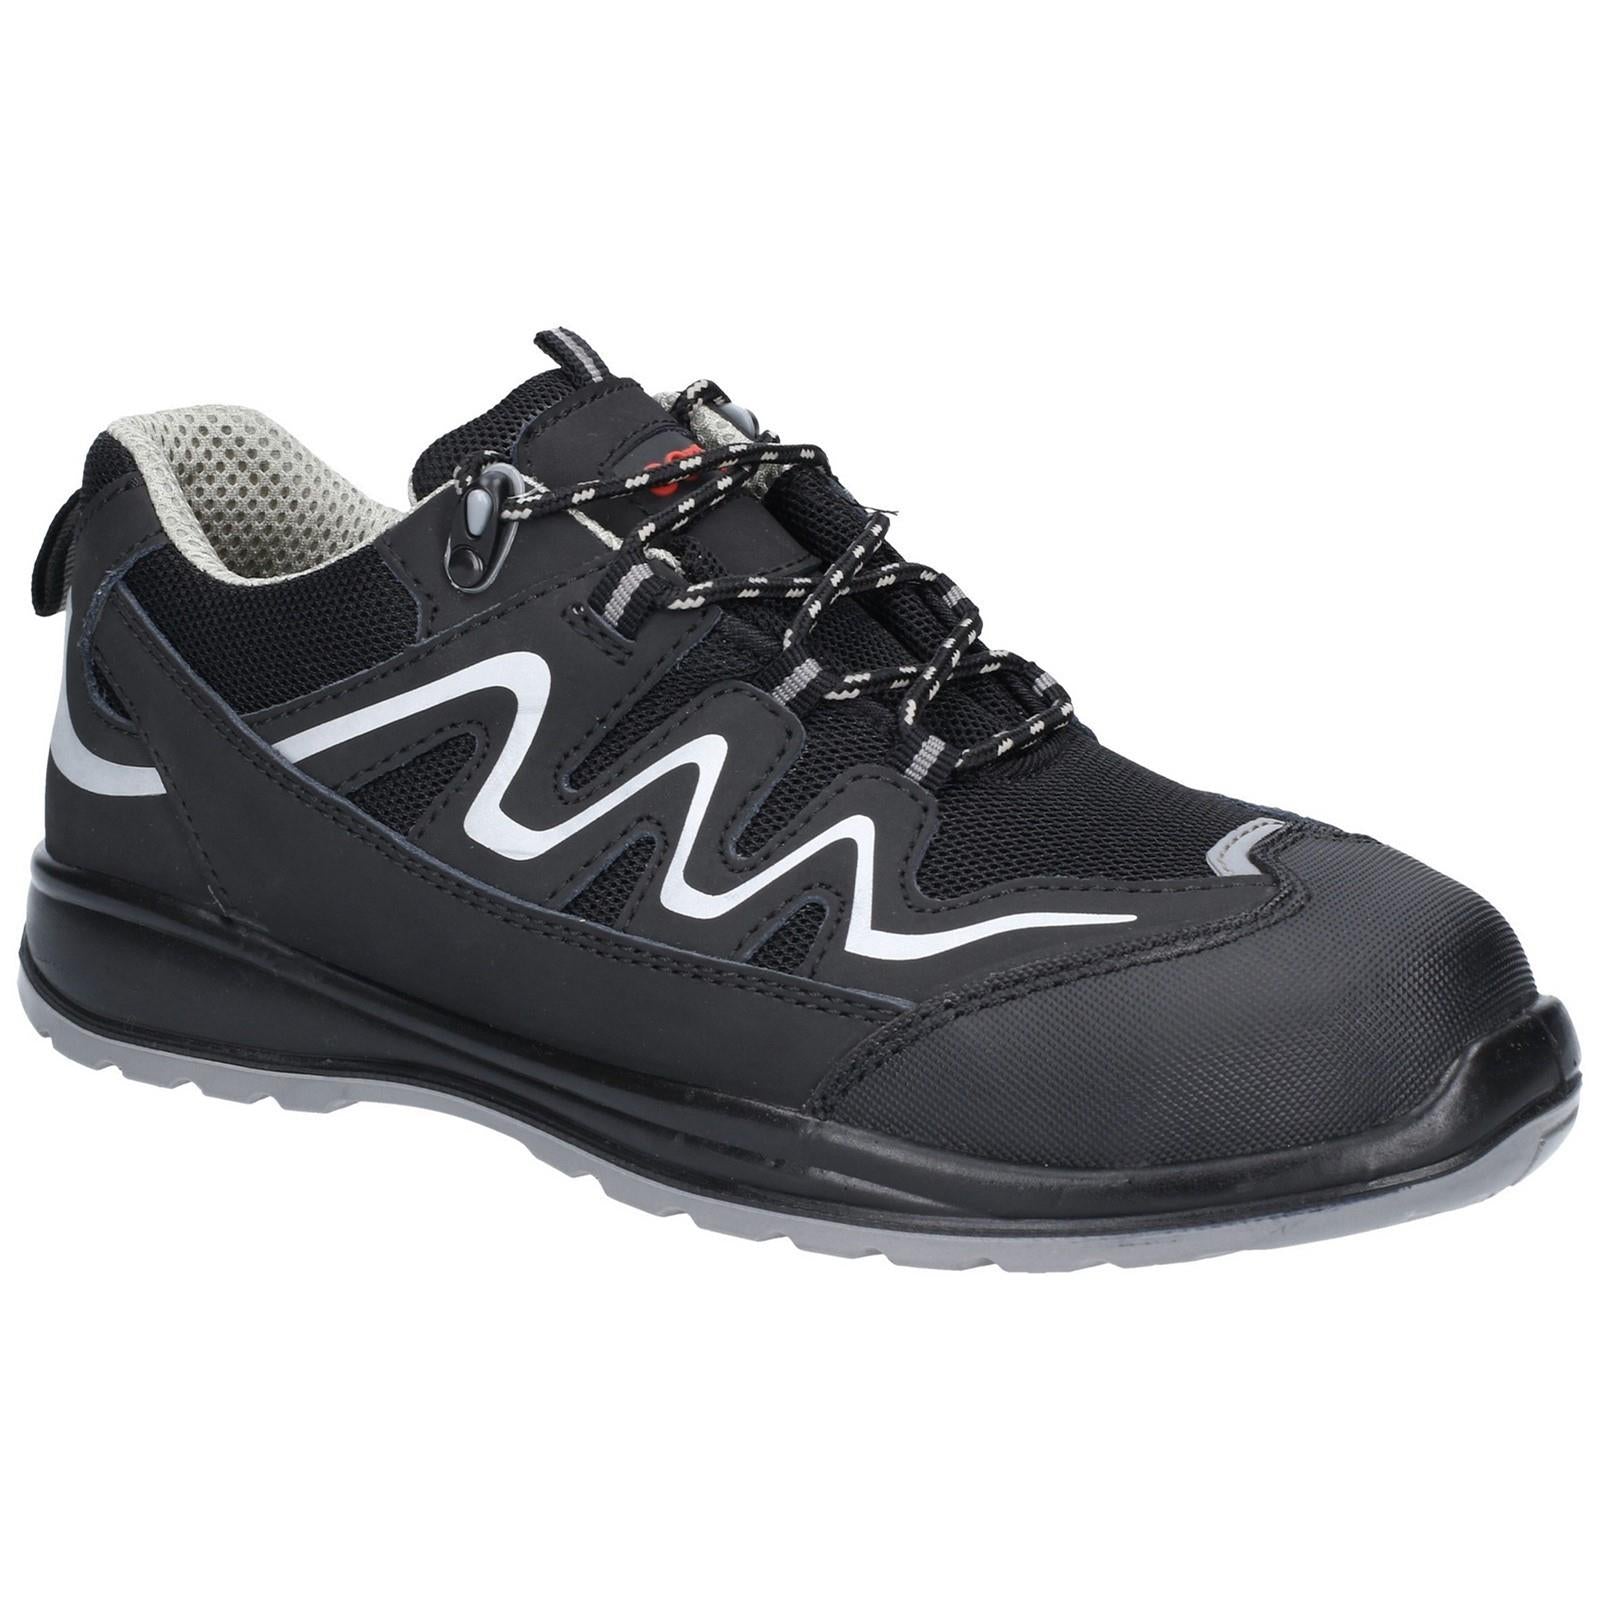 Centek FS313 S3 black water resistant steel toe/midsole work safety trainer shoe